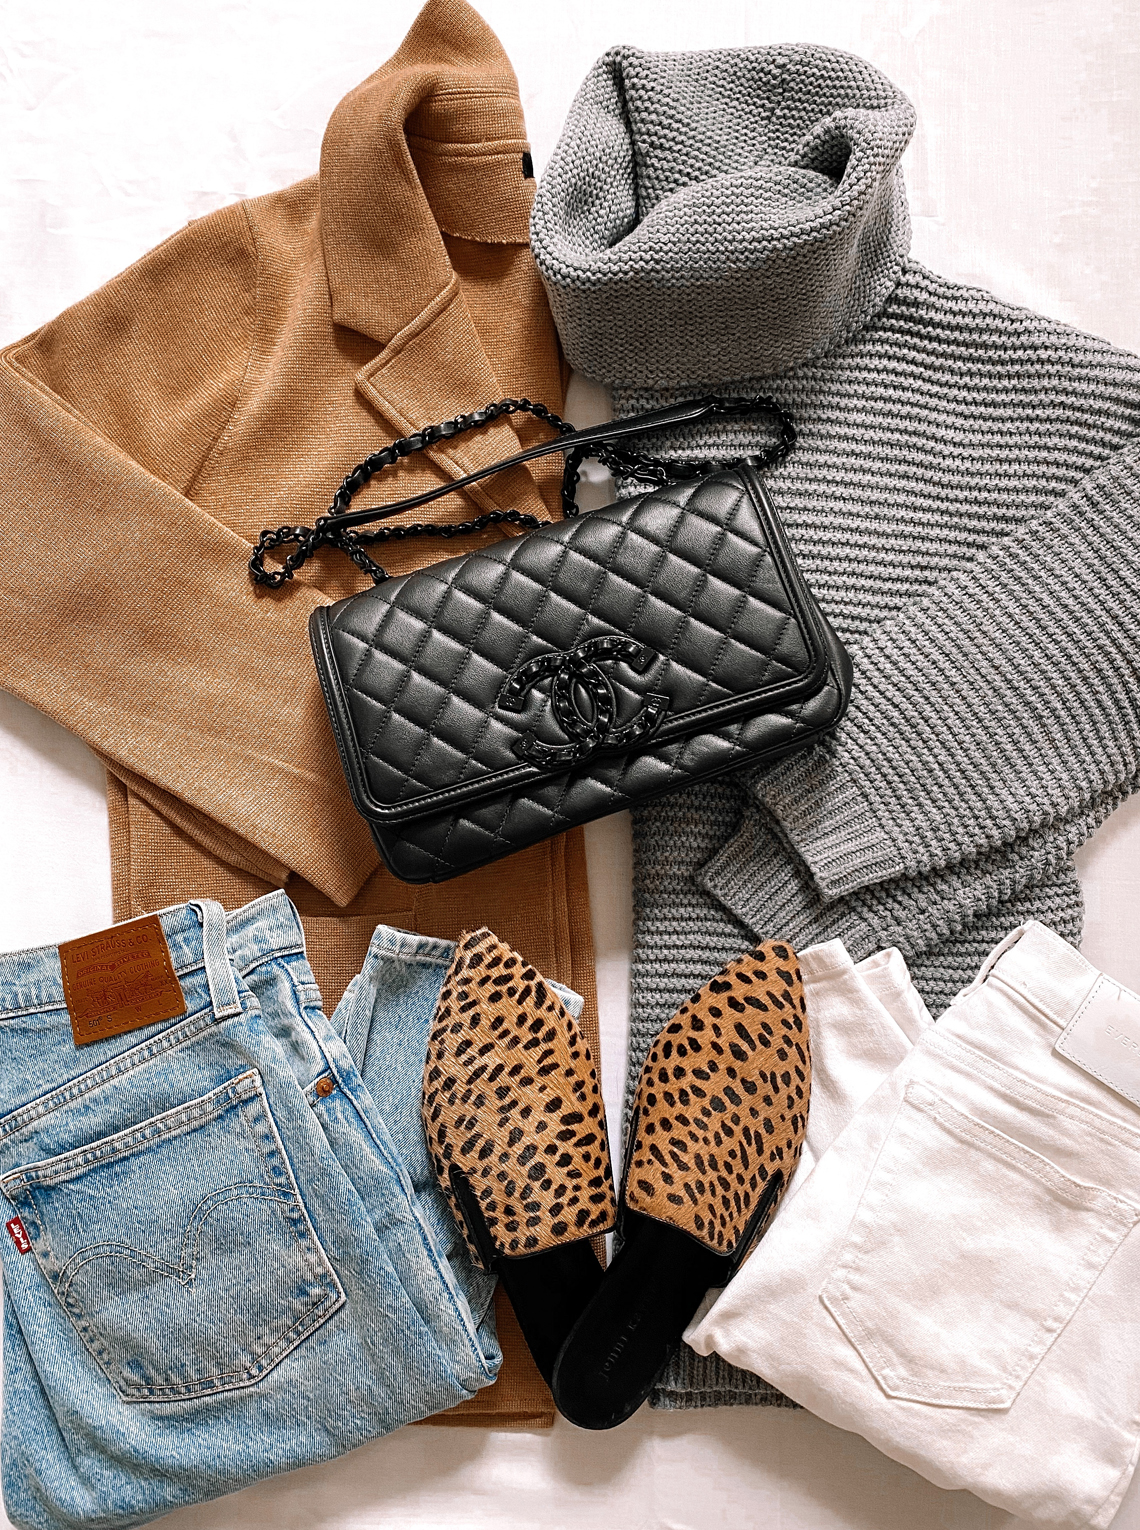 Fashion Jackson Grey Sweater Camel Cardigan White Jeans Denim Jeans Leopard Mules Black Chanel Handbag